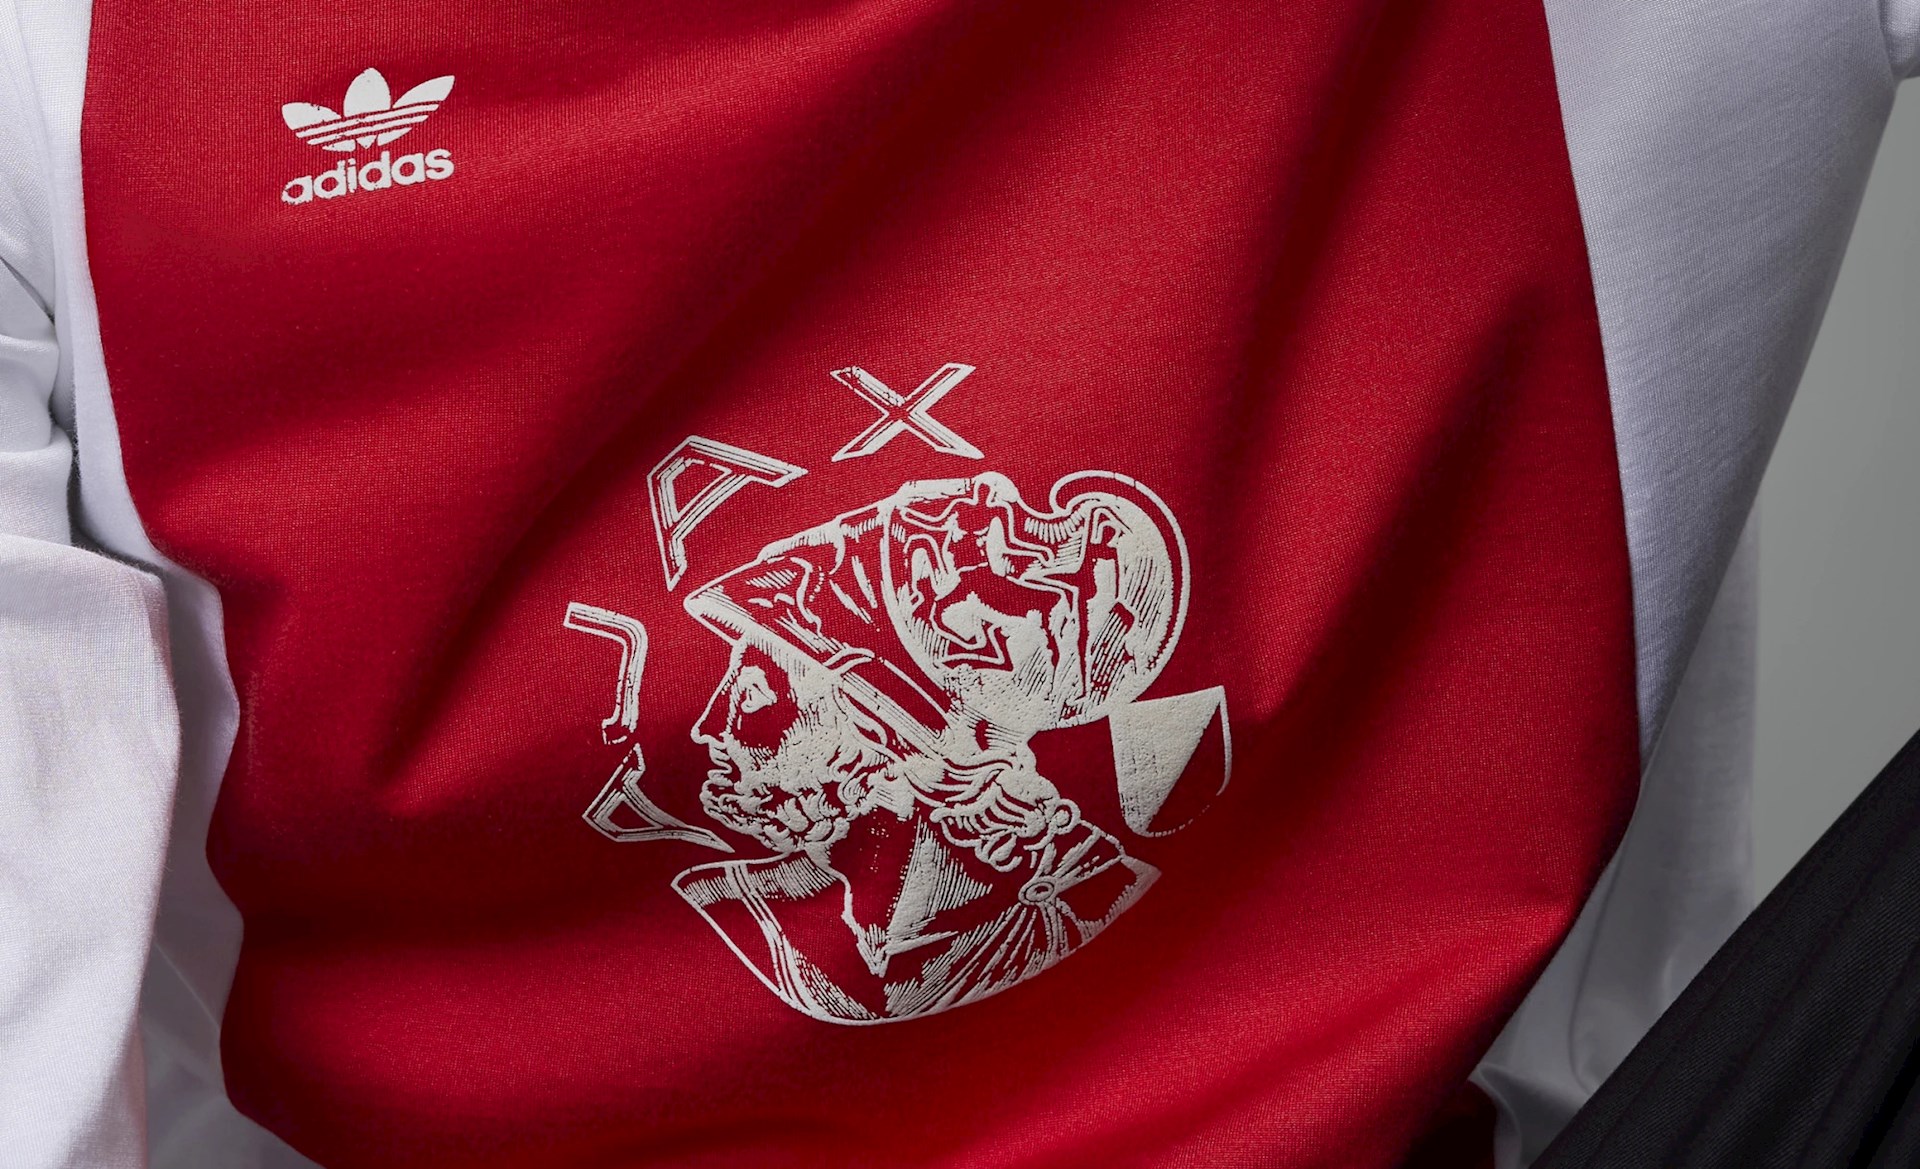 adidas lanceert Ajax retro voetbalshirt 1973 - Voetbalshirts.com